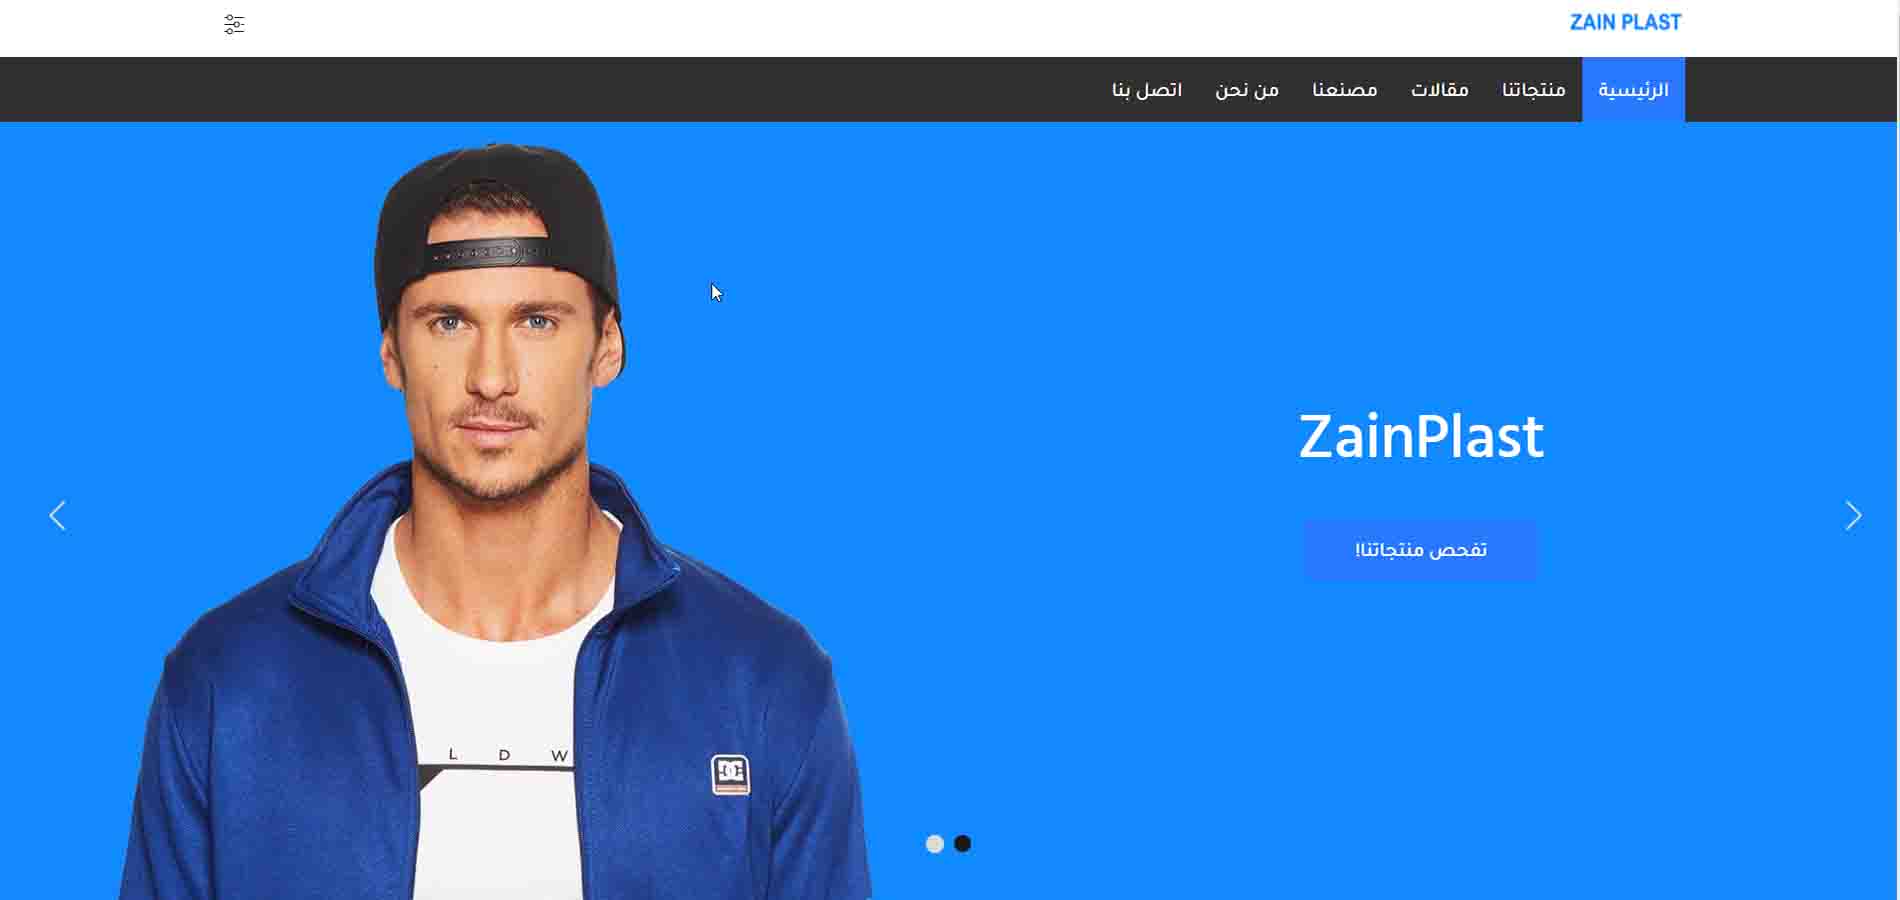 Zain Plast Website